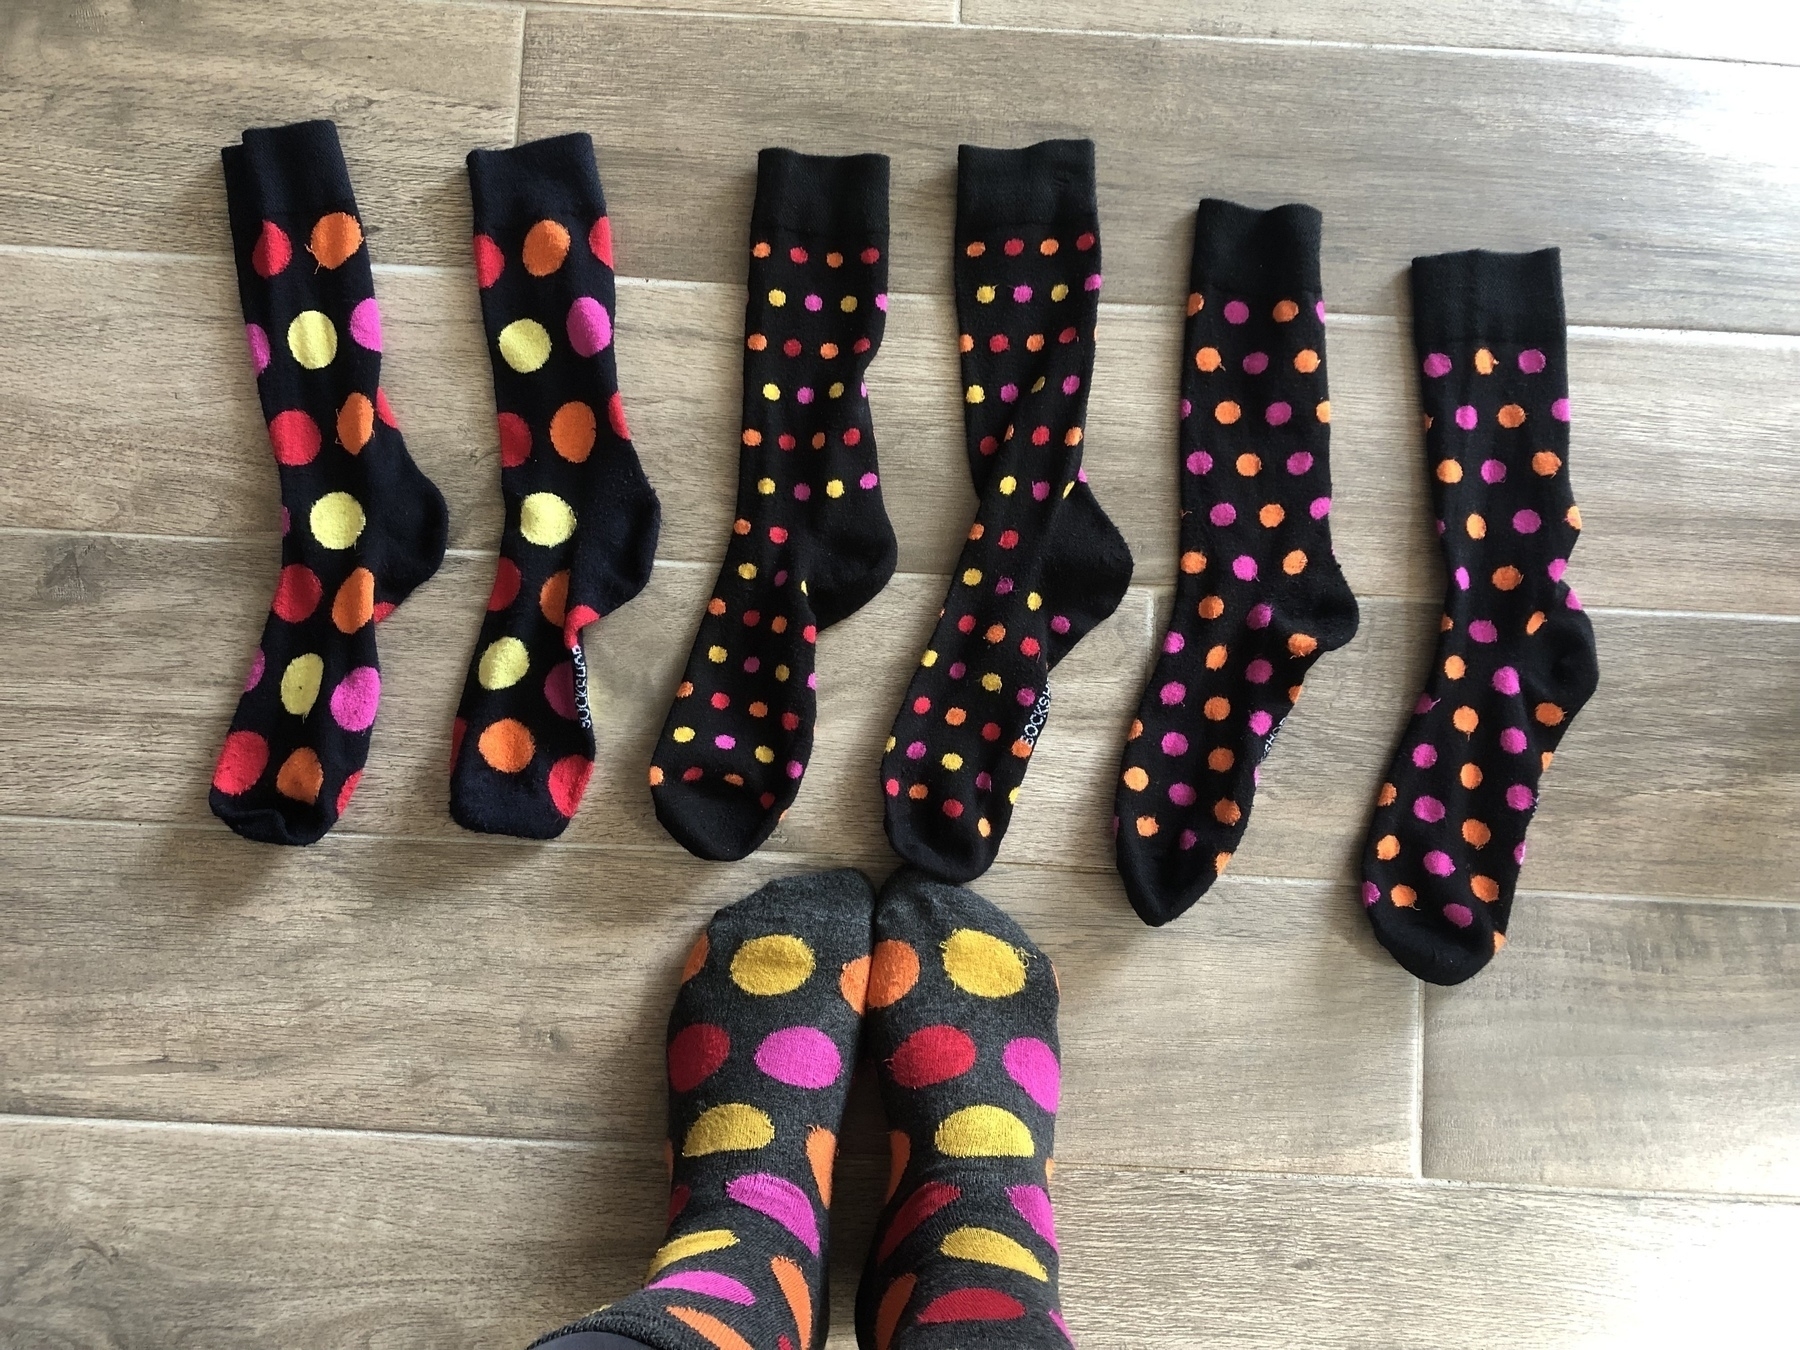 A row of colourful, spotty socks